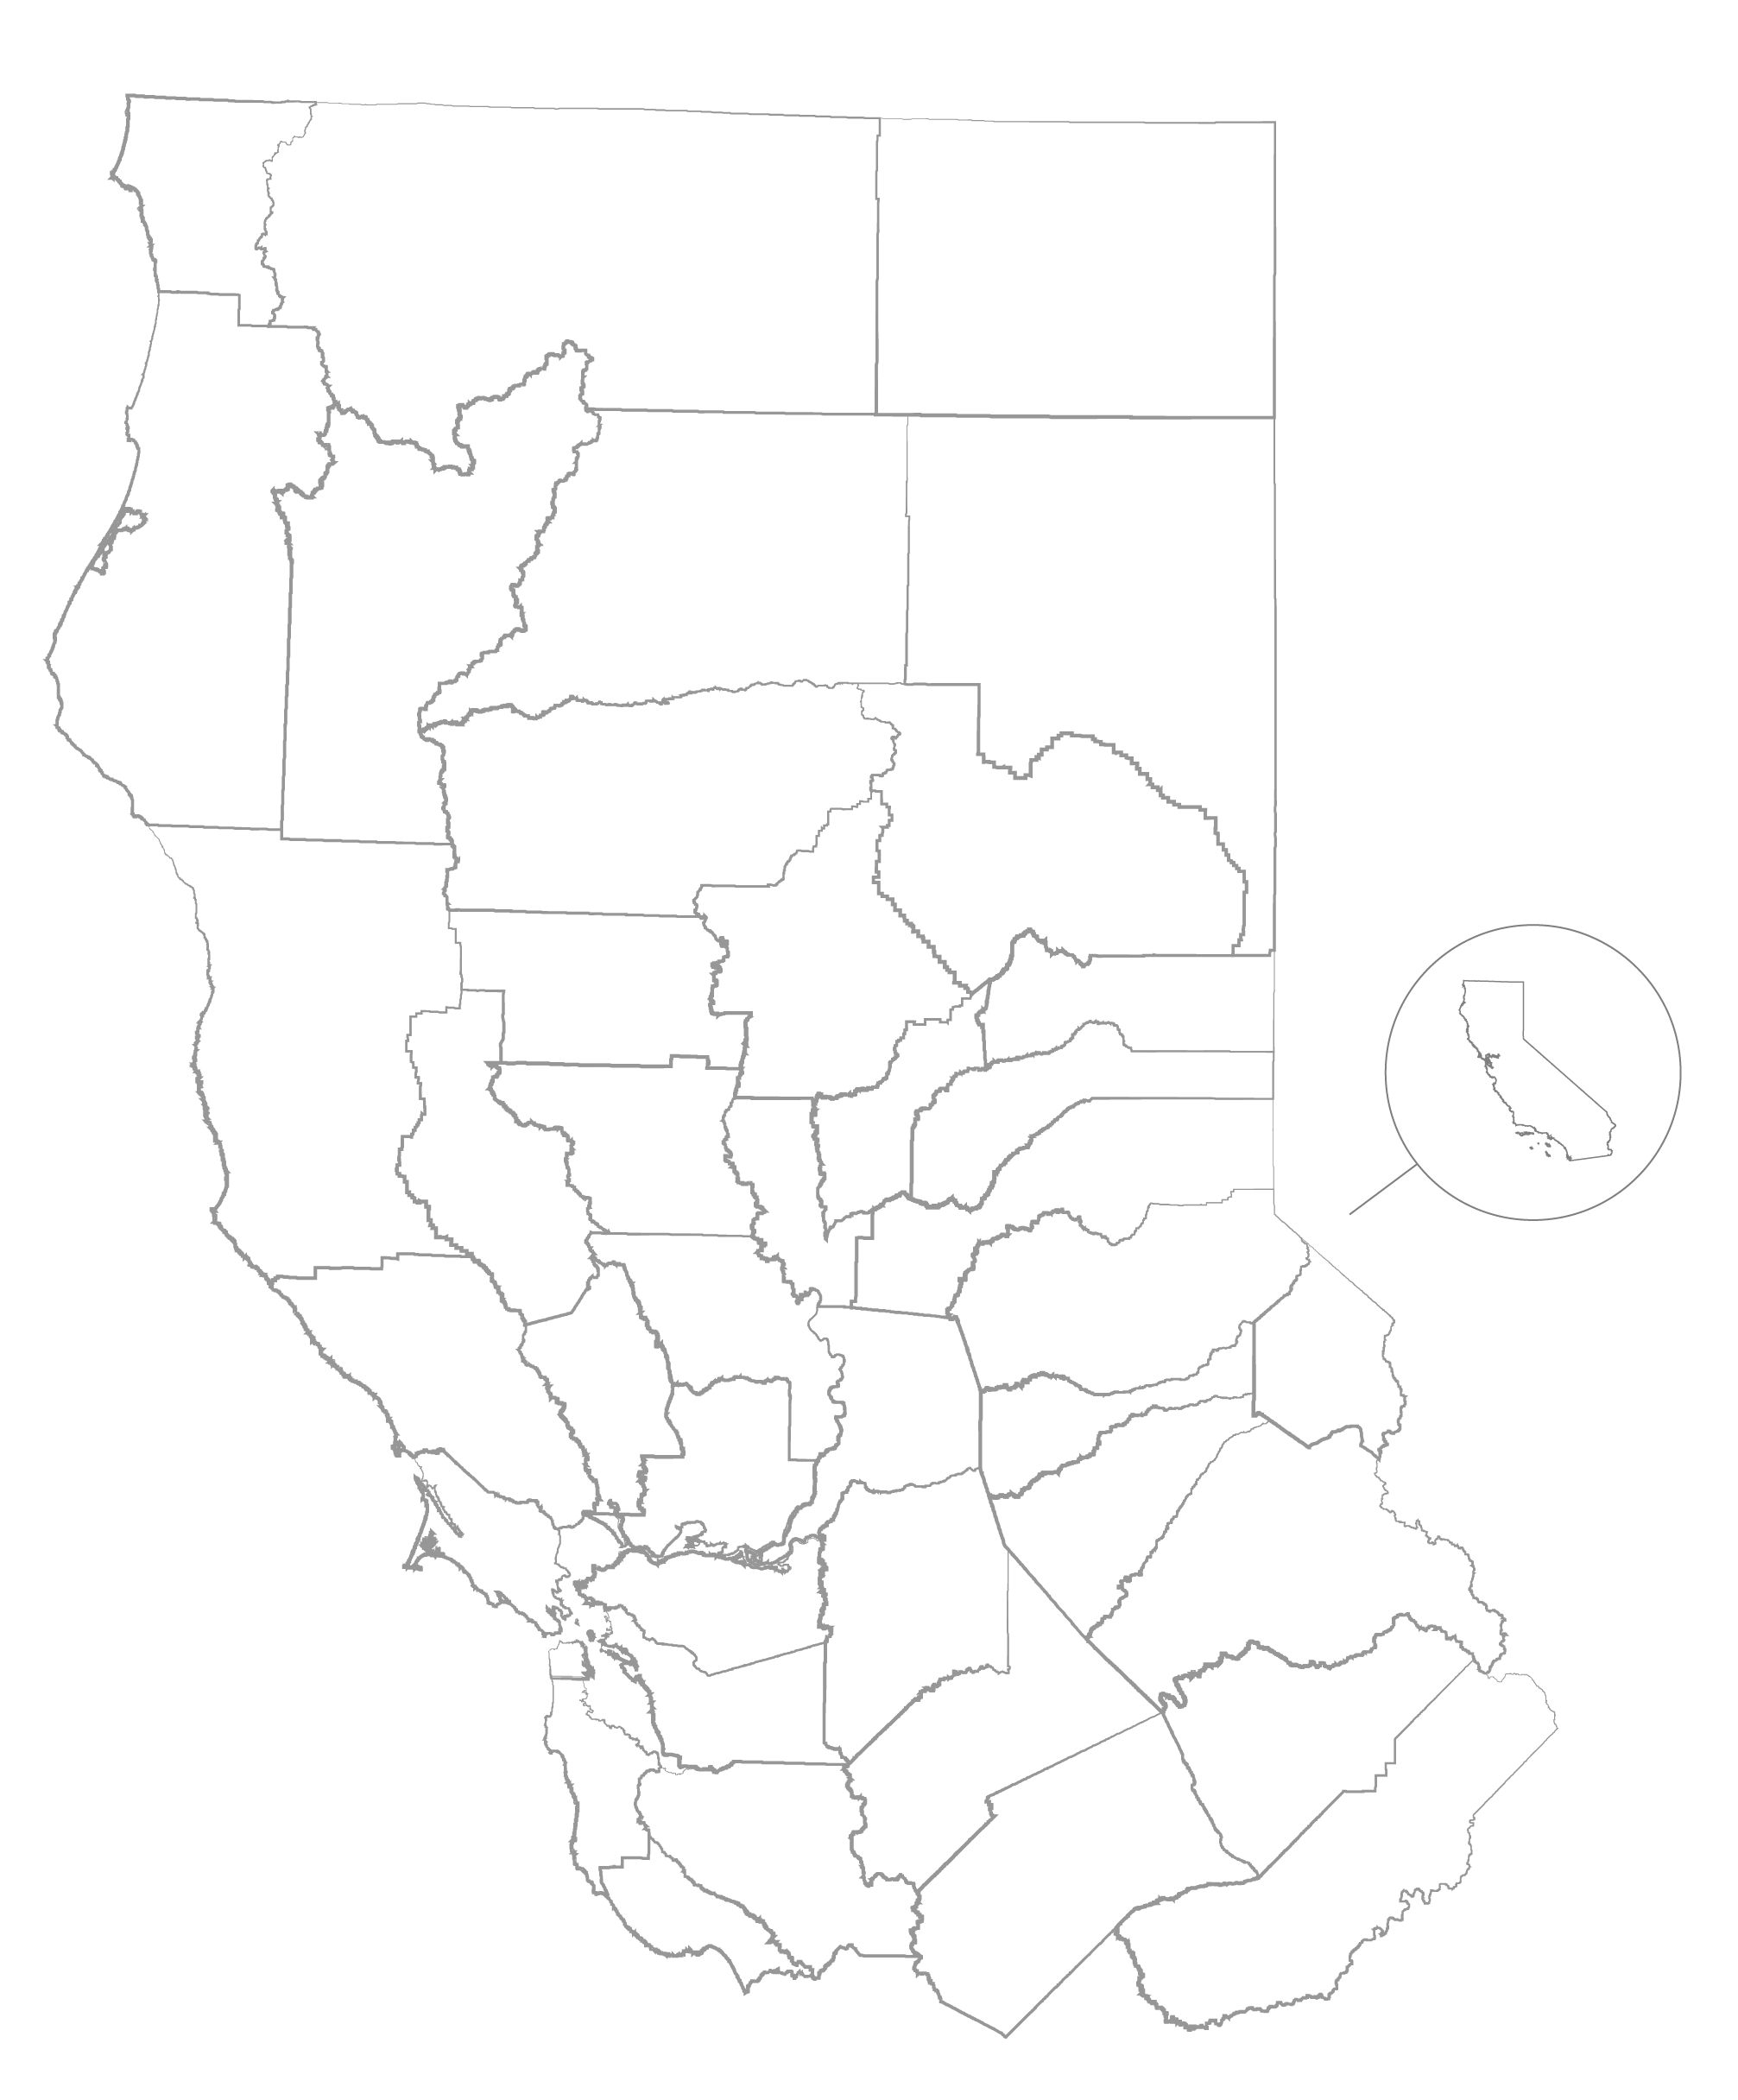 california map outline